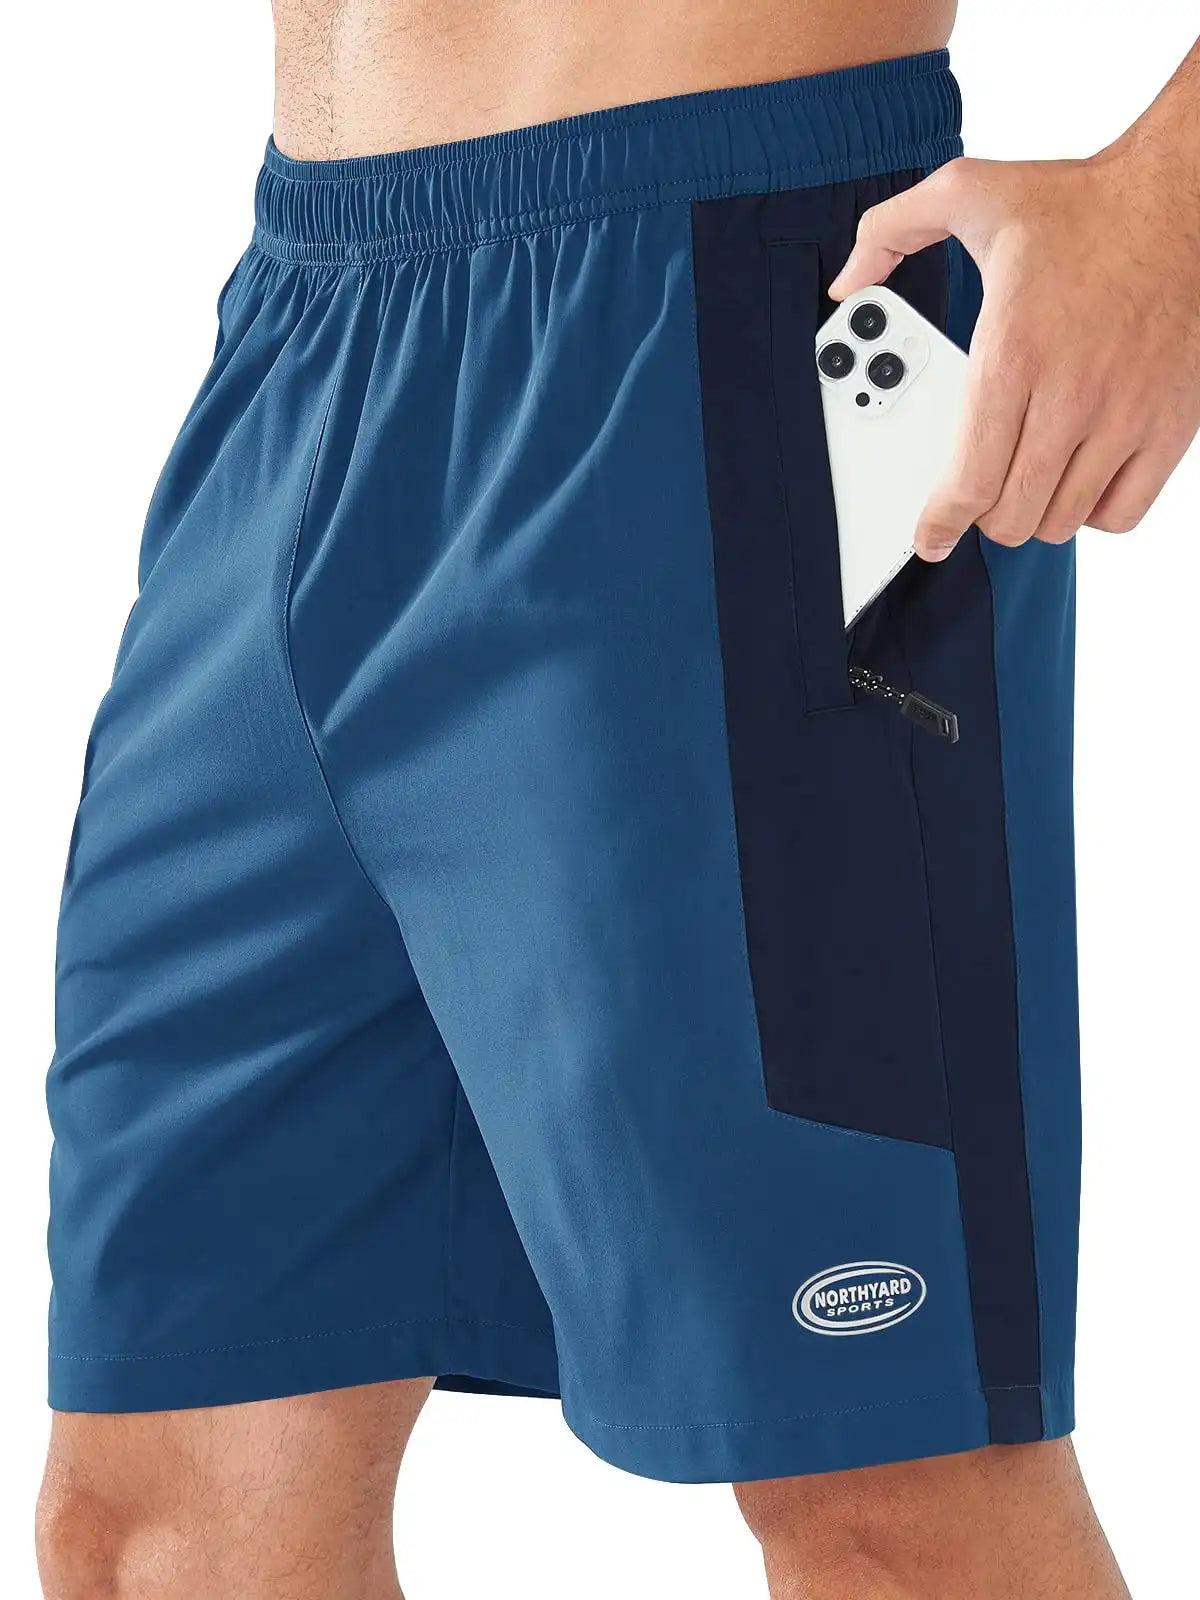 NORTHYARD 7" Athletic Shorts Zip Pockets